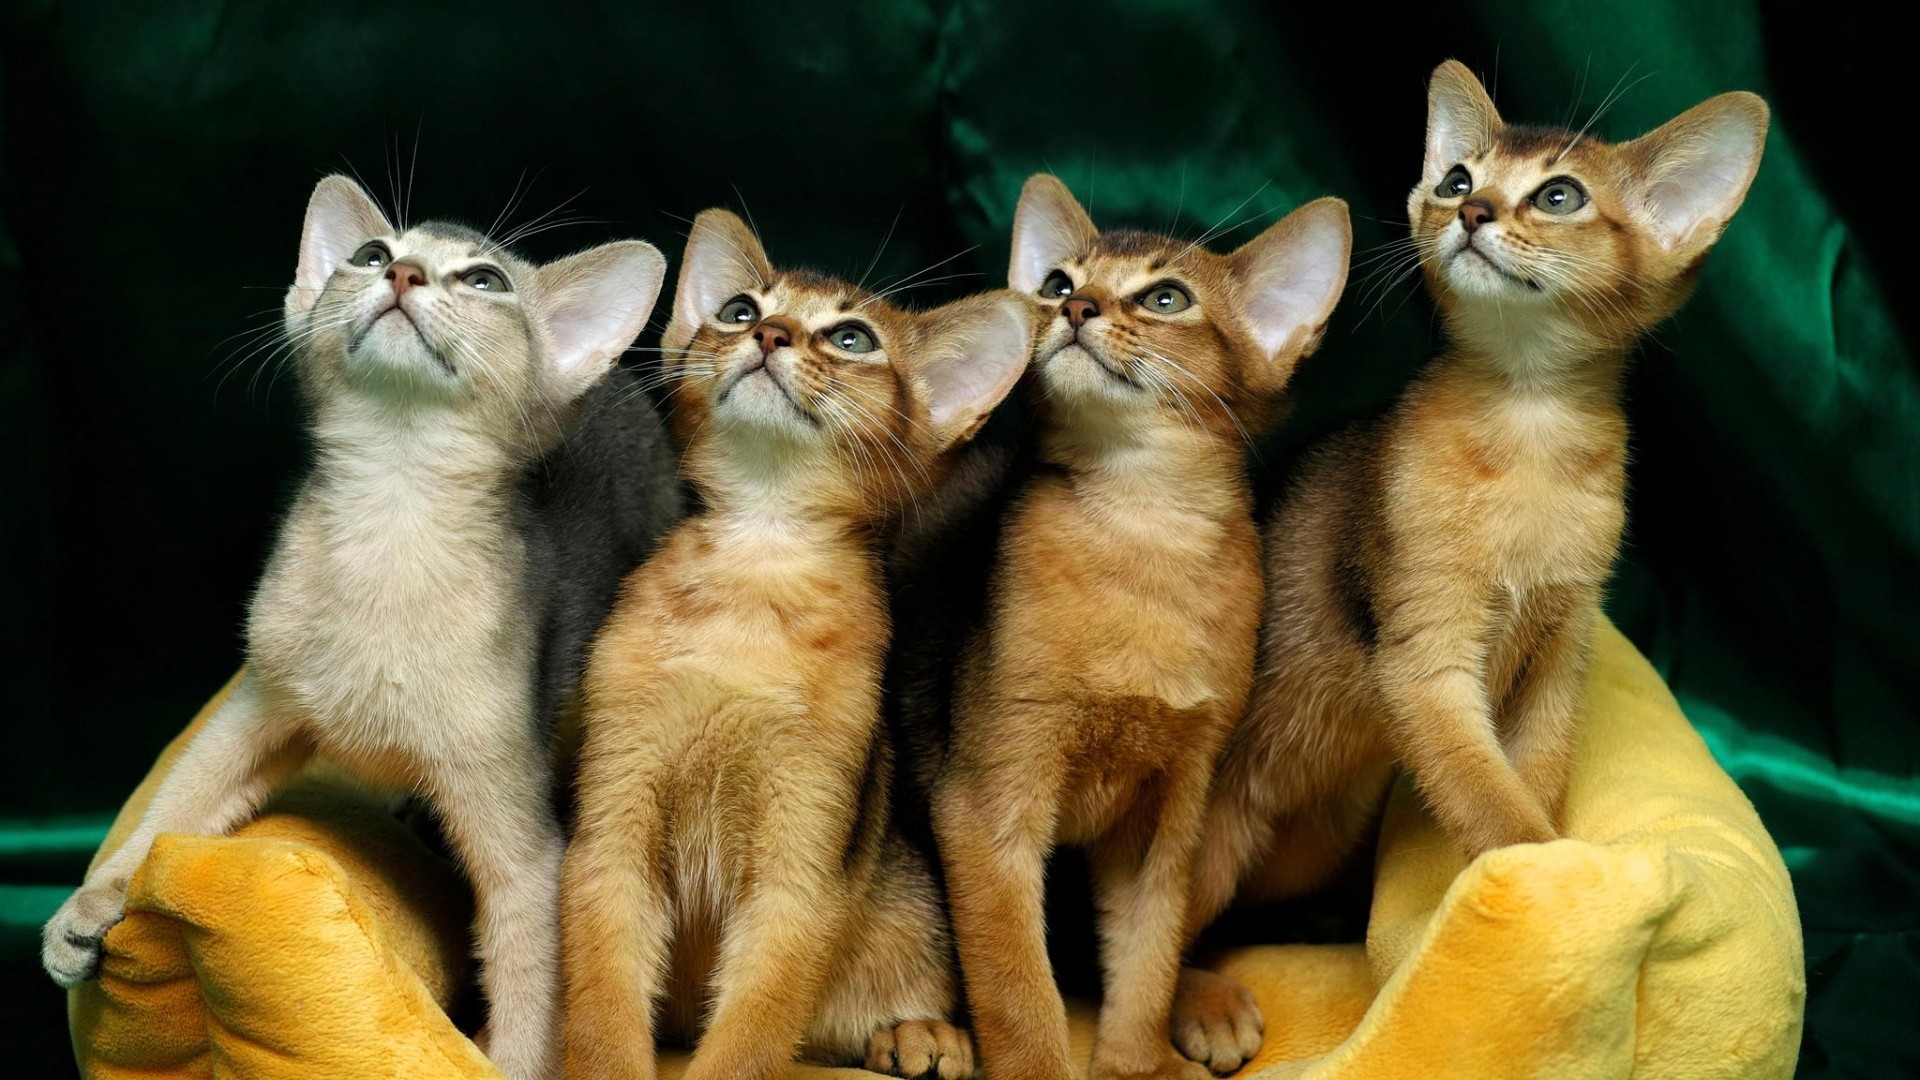 4 Cute Kittens for 1920 x 1080 HDTV 1080p resolution